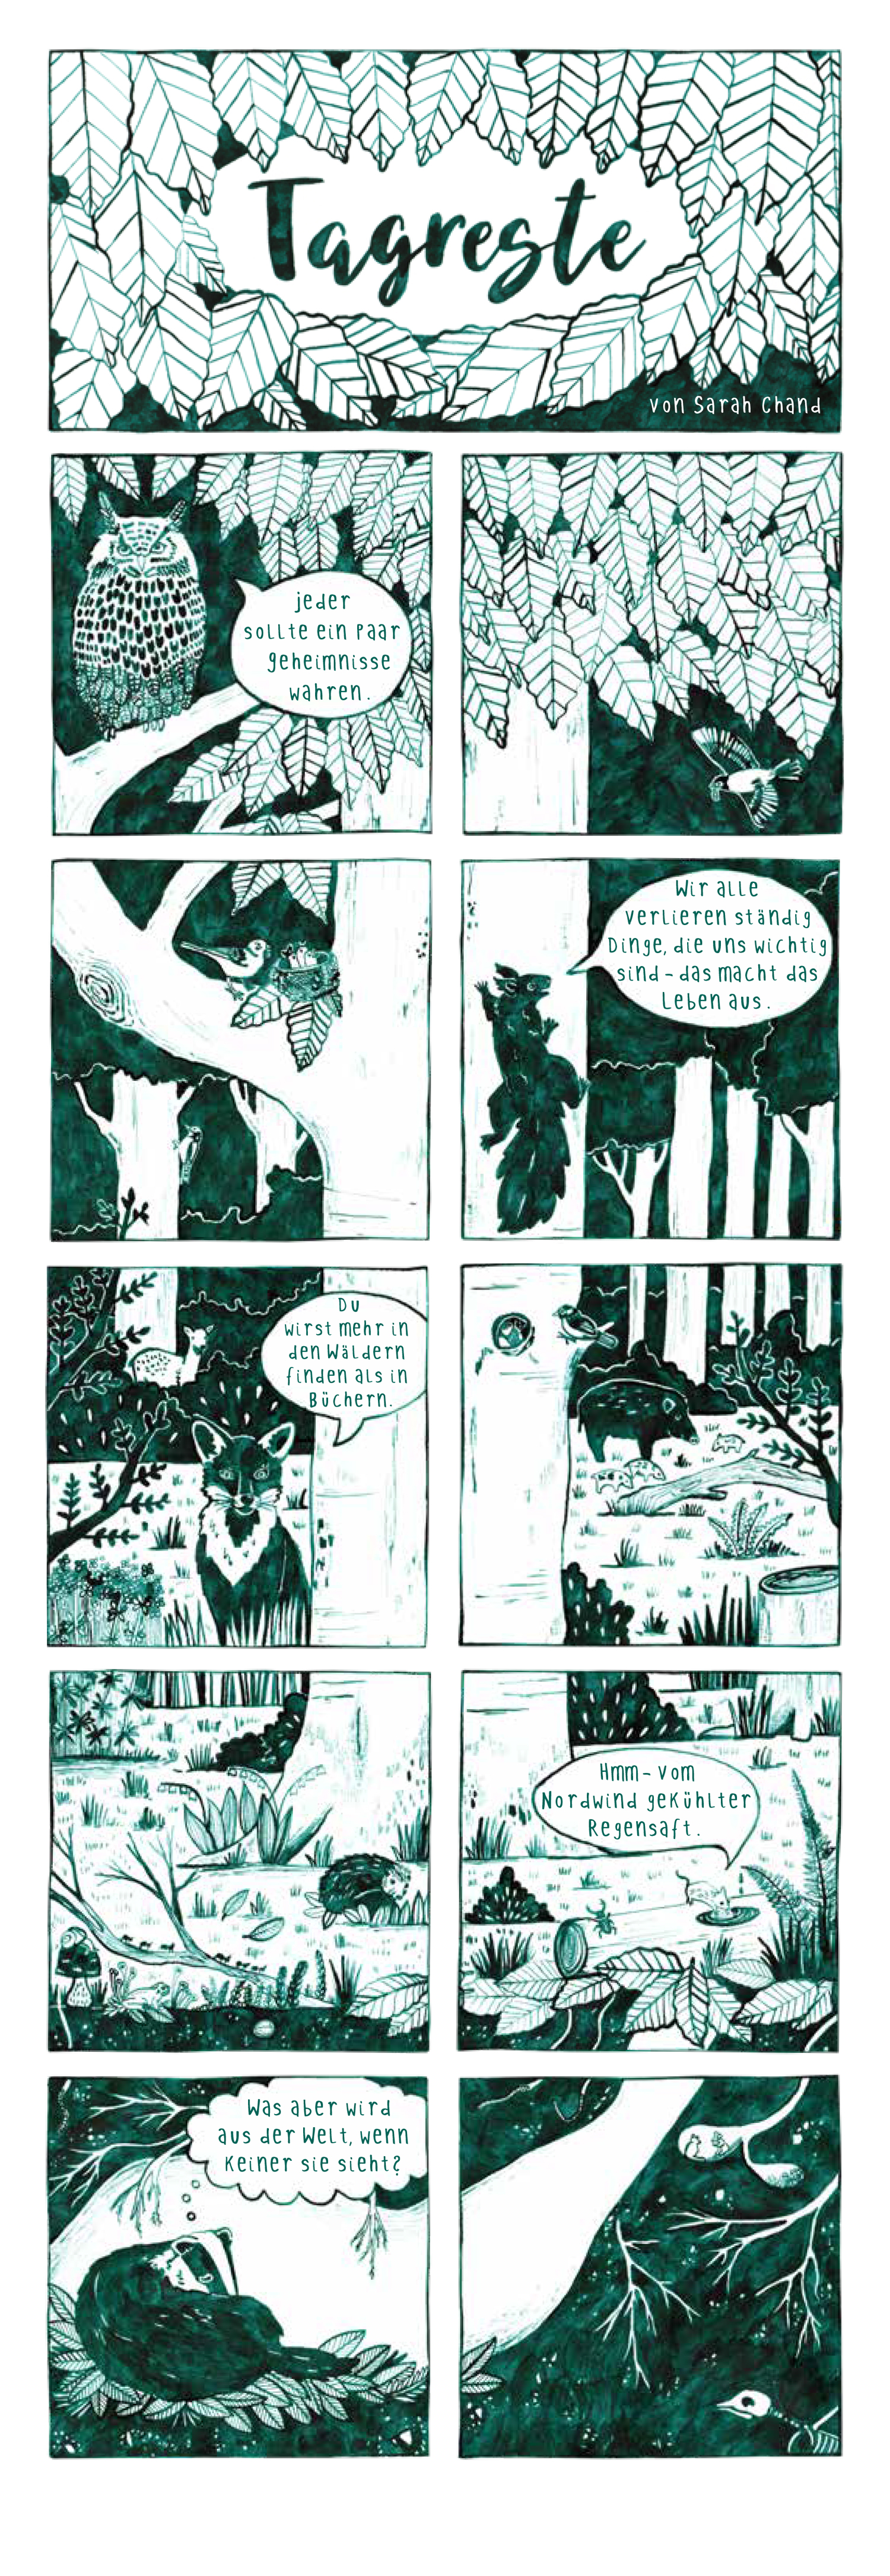 Comicstrip von Sarah Chand fuer das Comicmagazin Pure Fruit (Ausgabe 15)